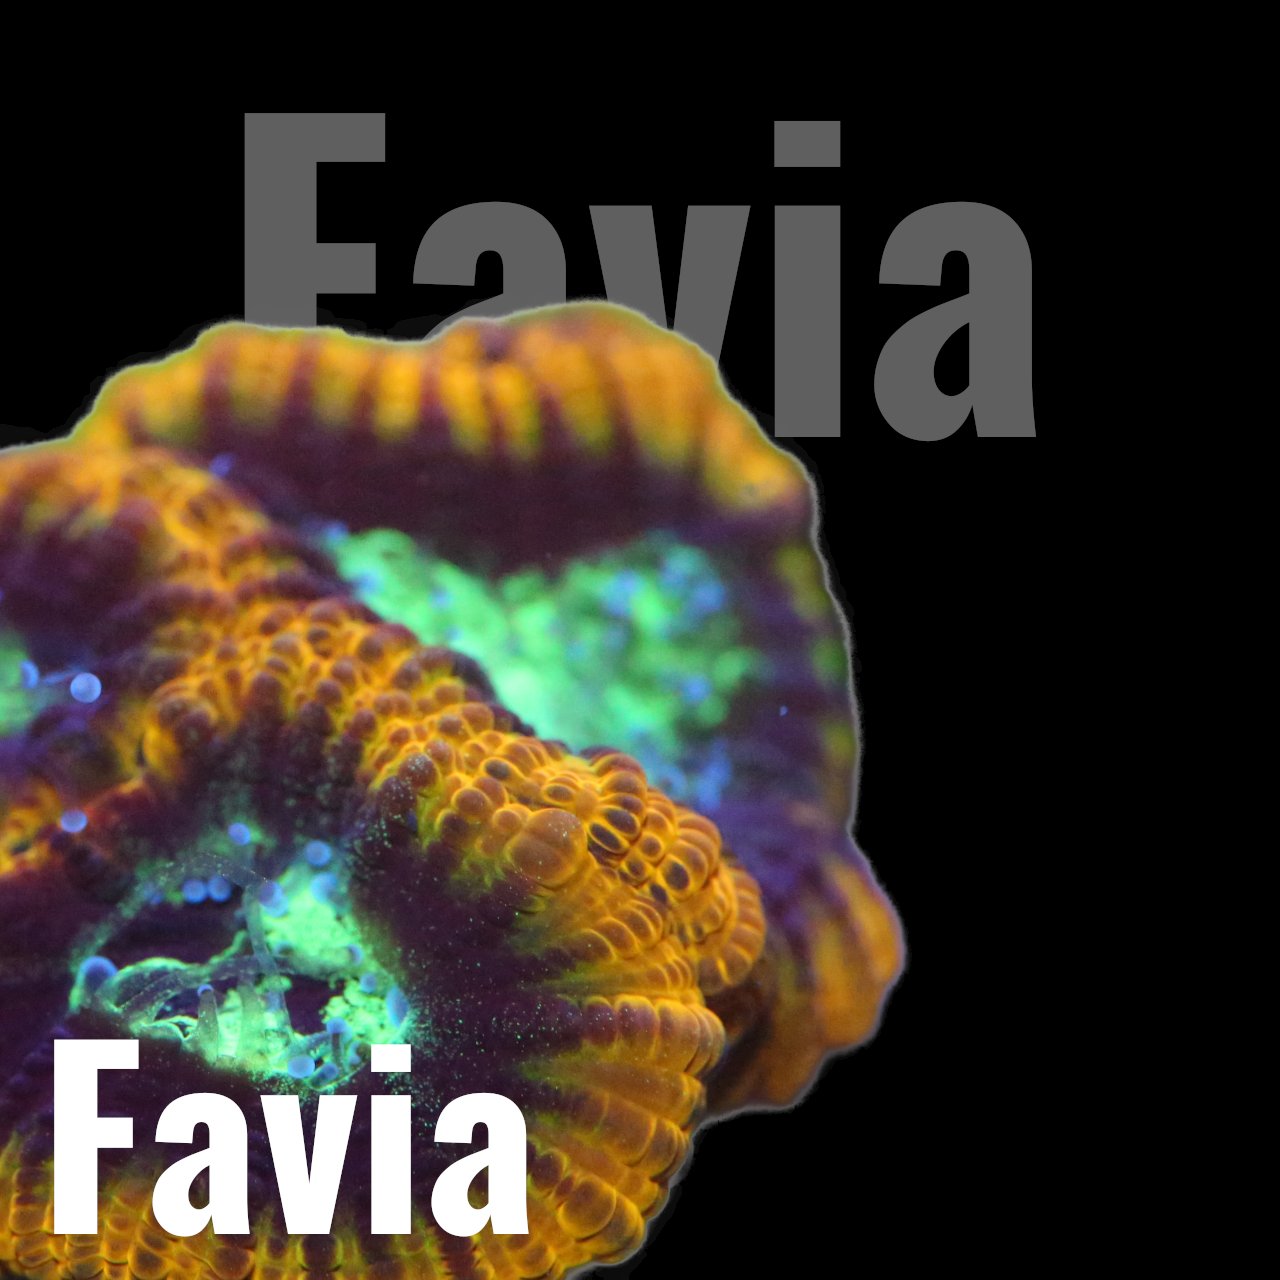 Favia/Favites - Corals4U